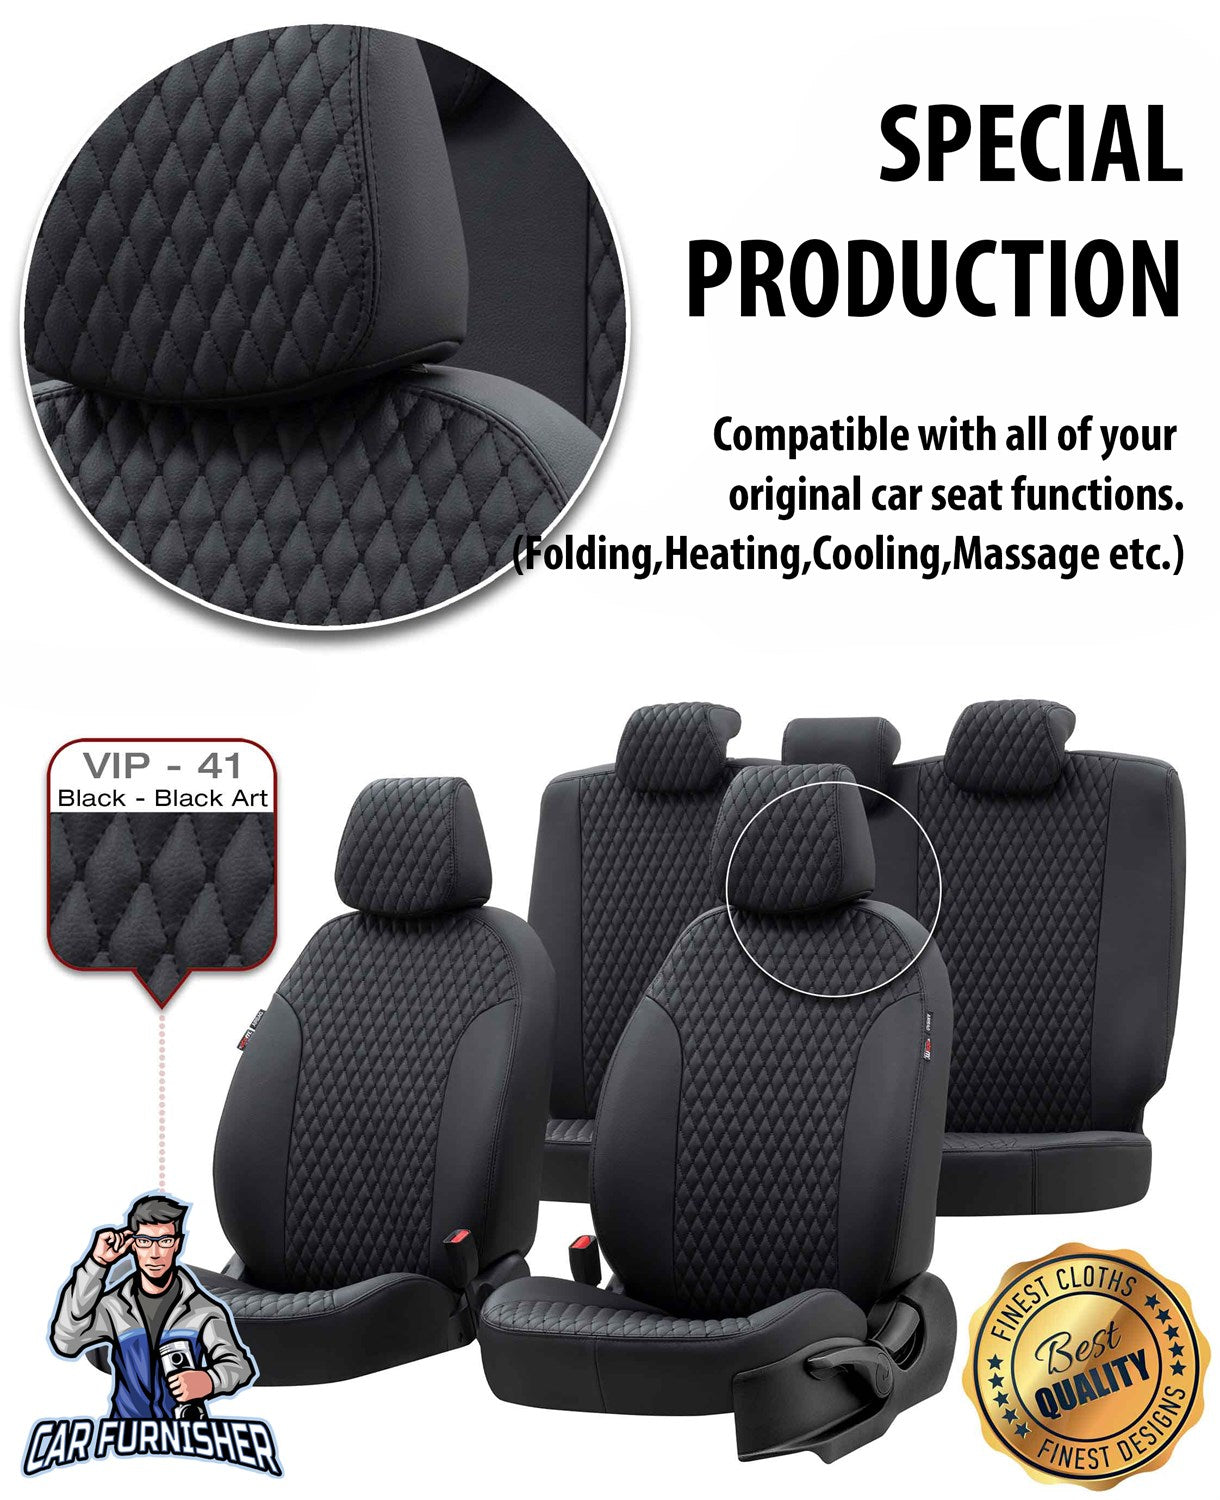 Chevrolet Captiva Seat Cover Amsterdam Leather Design Black Leather